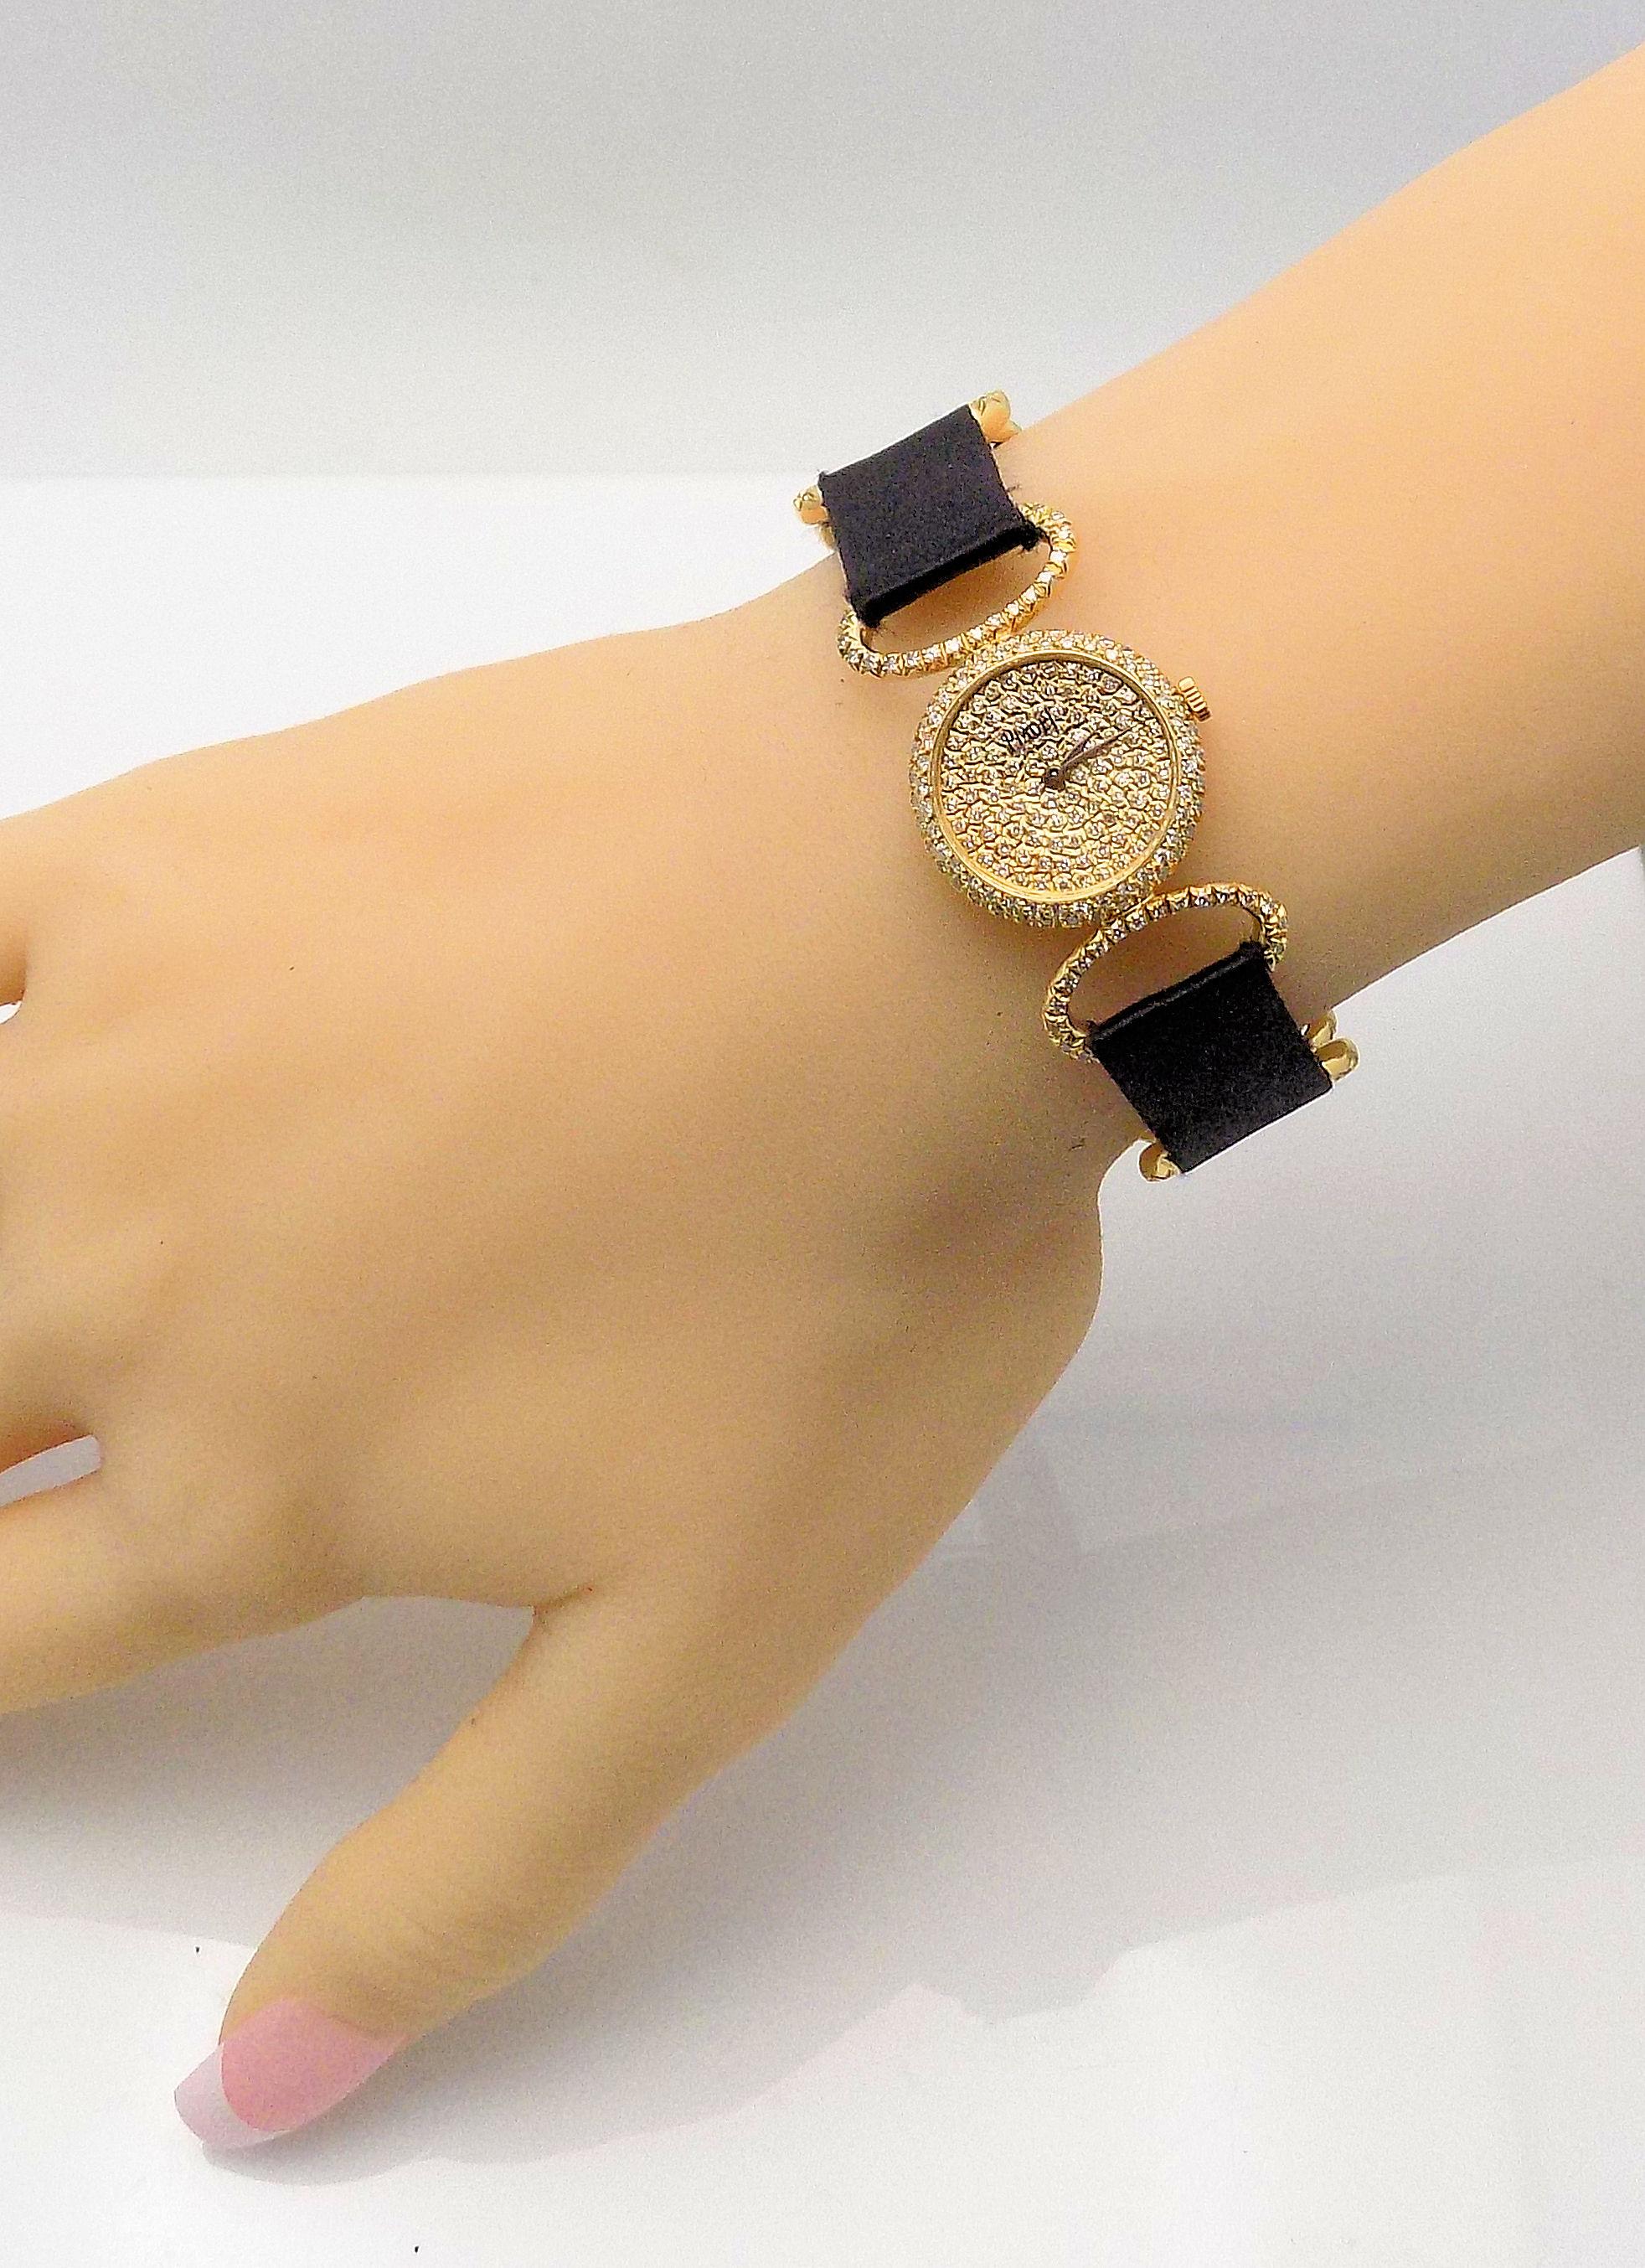 18 Karat Yellow Gold and Diamond Piaget Wristwatch For Sale 4